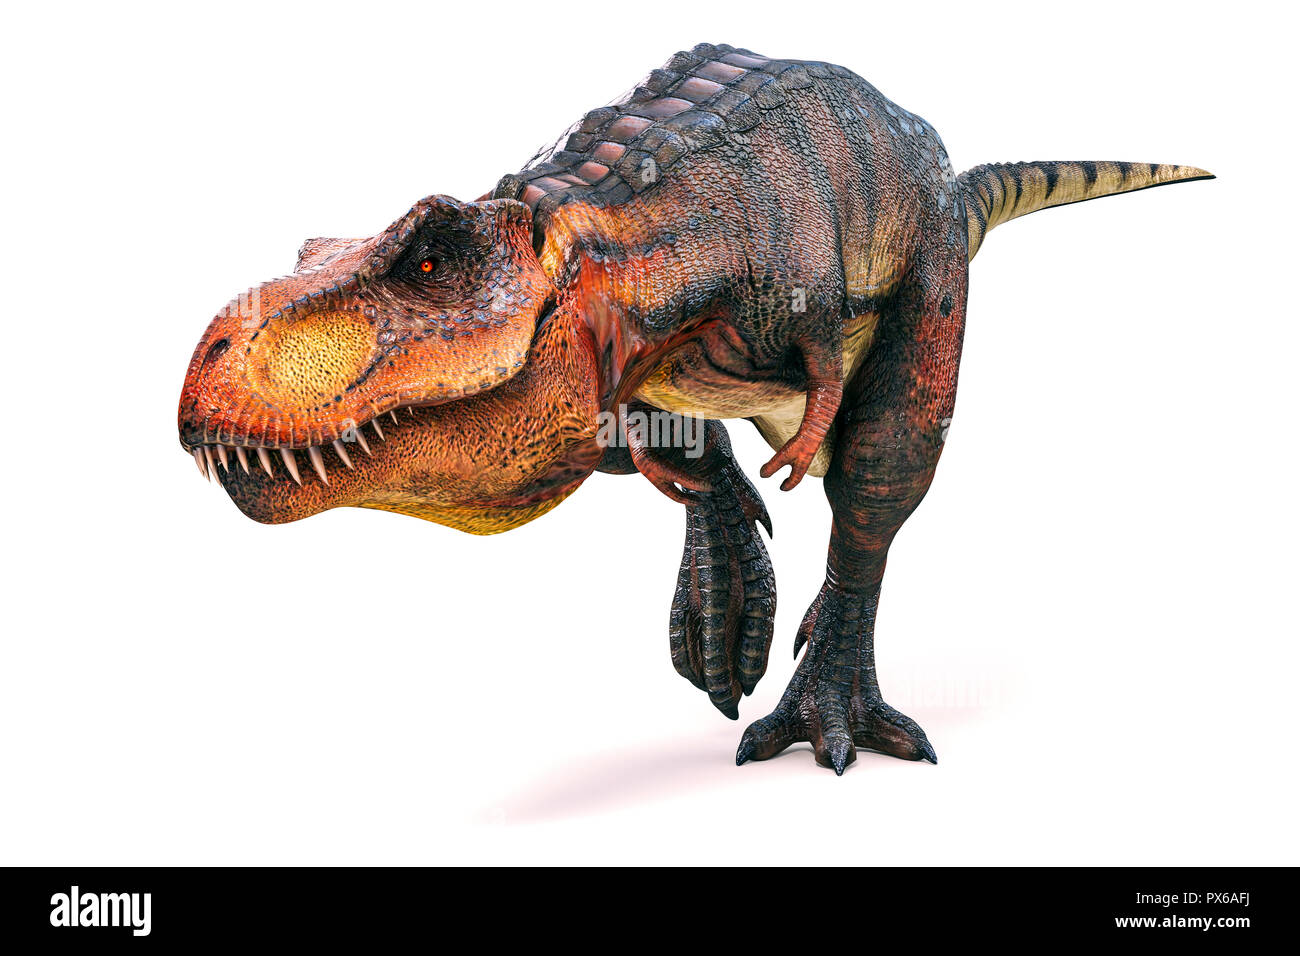 Dino T-Rex 3D Run on the App Store